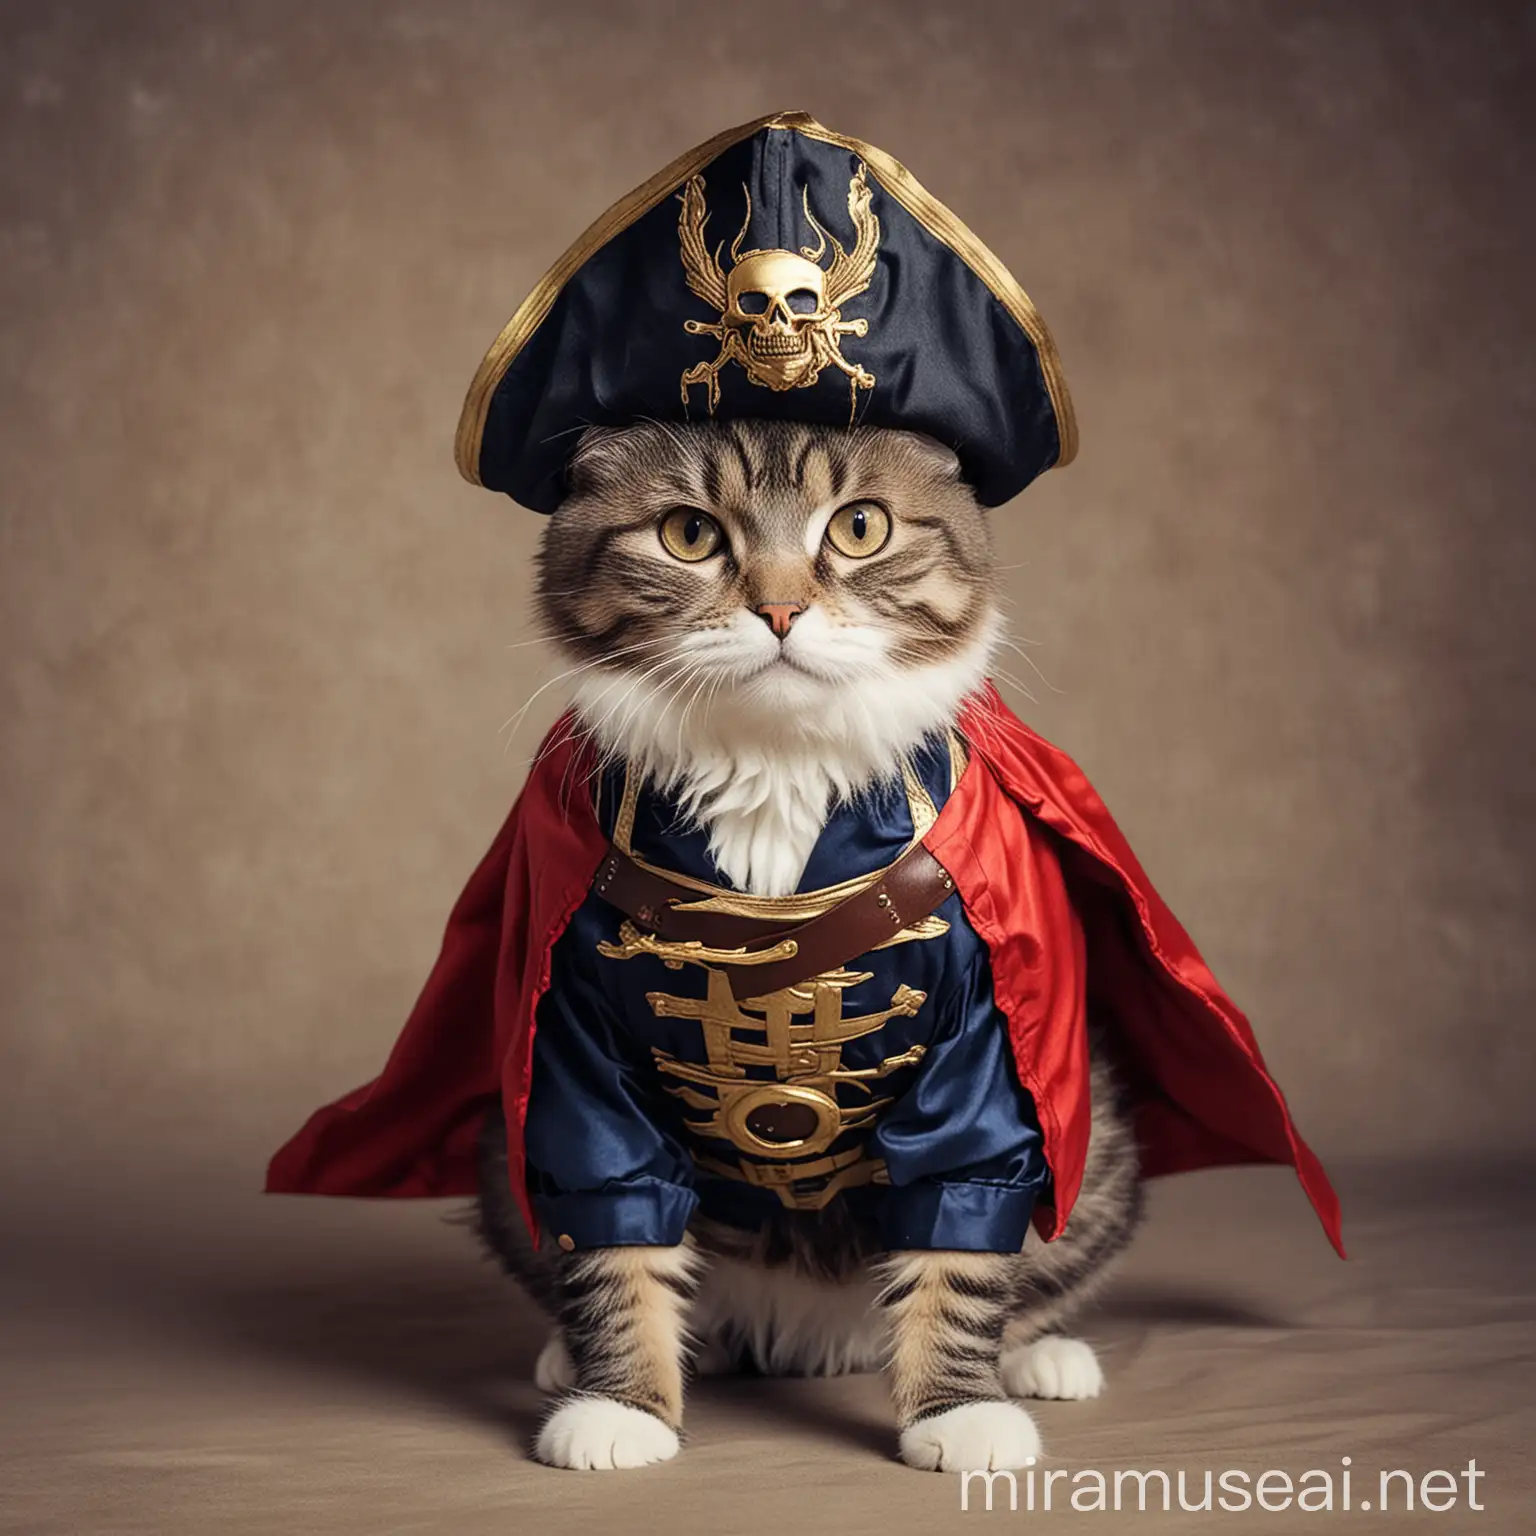 Fun Cat Costume Ideas Superheroes Pirates and Historical Figures